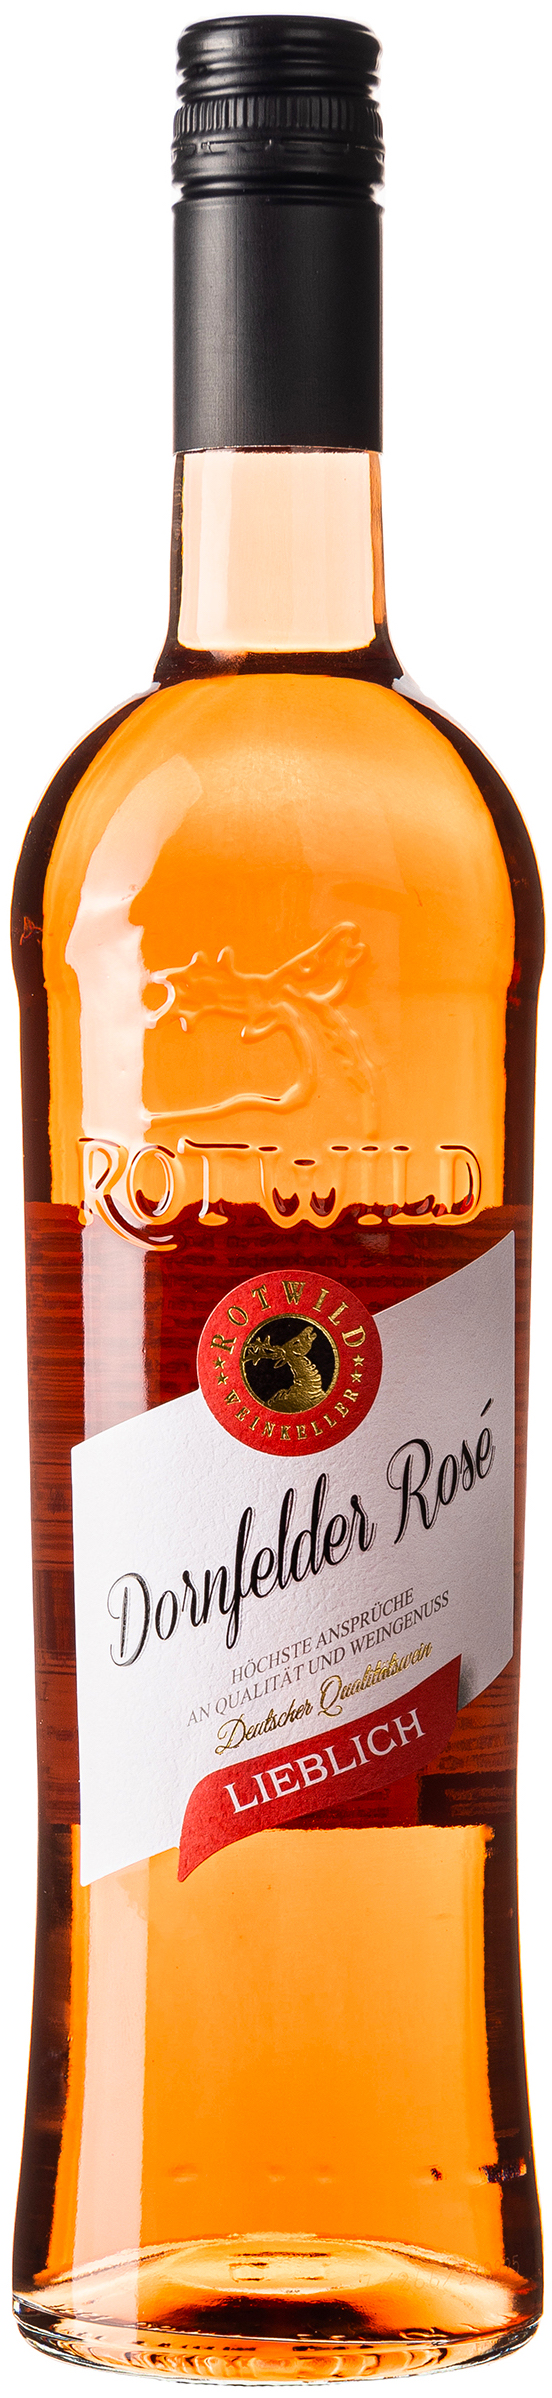 Rotwild Dornfelder Rosé lieblich 9,5% vol. 0,75L  